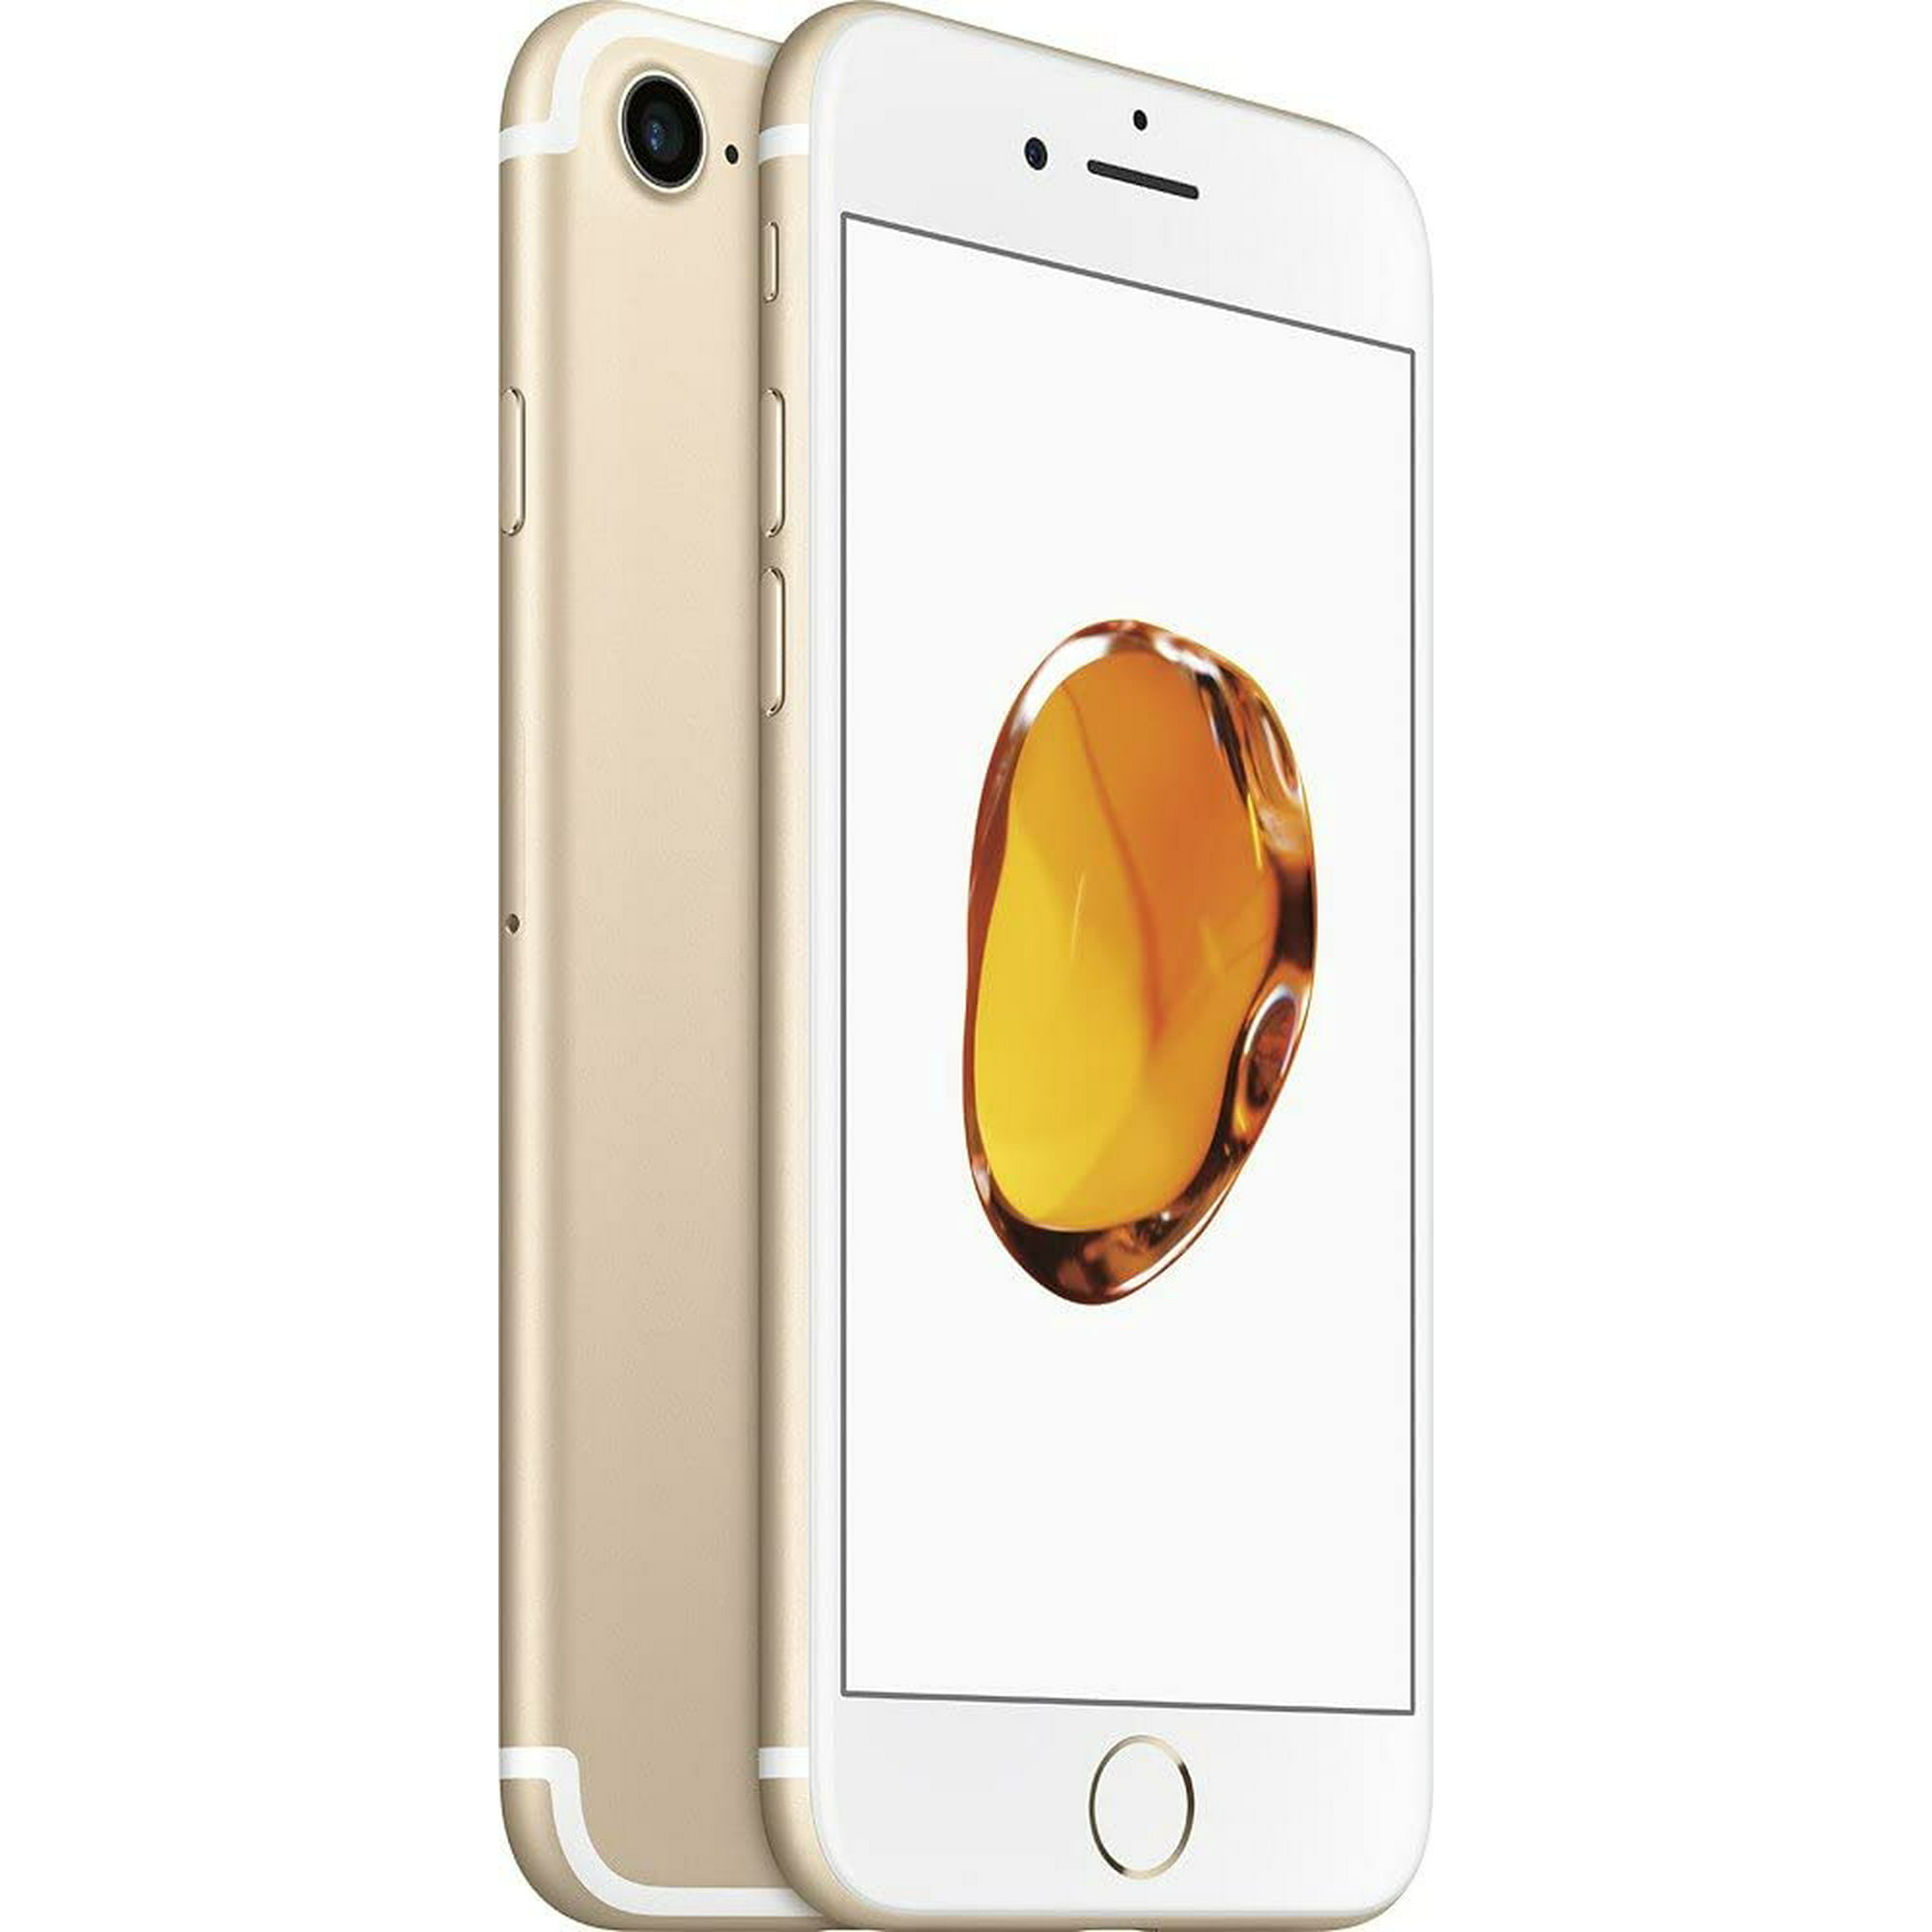 Apple iPhone 7 32GB GSM Factory Unlocked Smartphone - Gold - Open ...